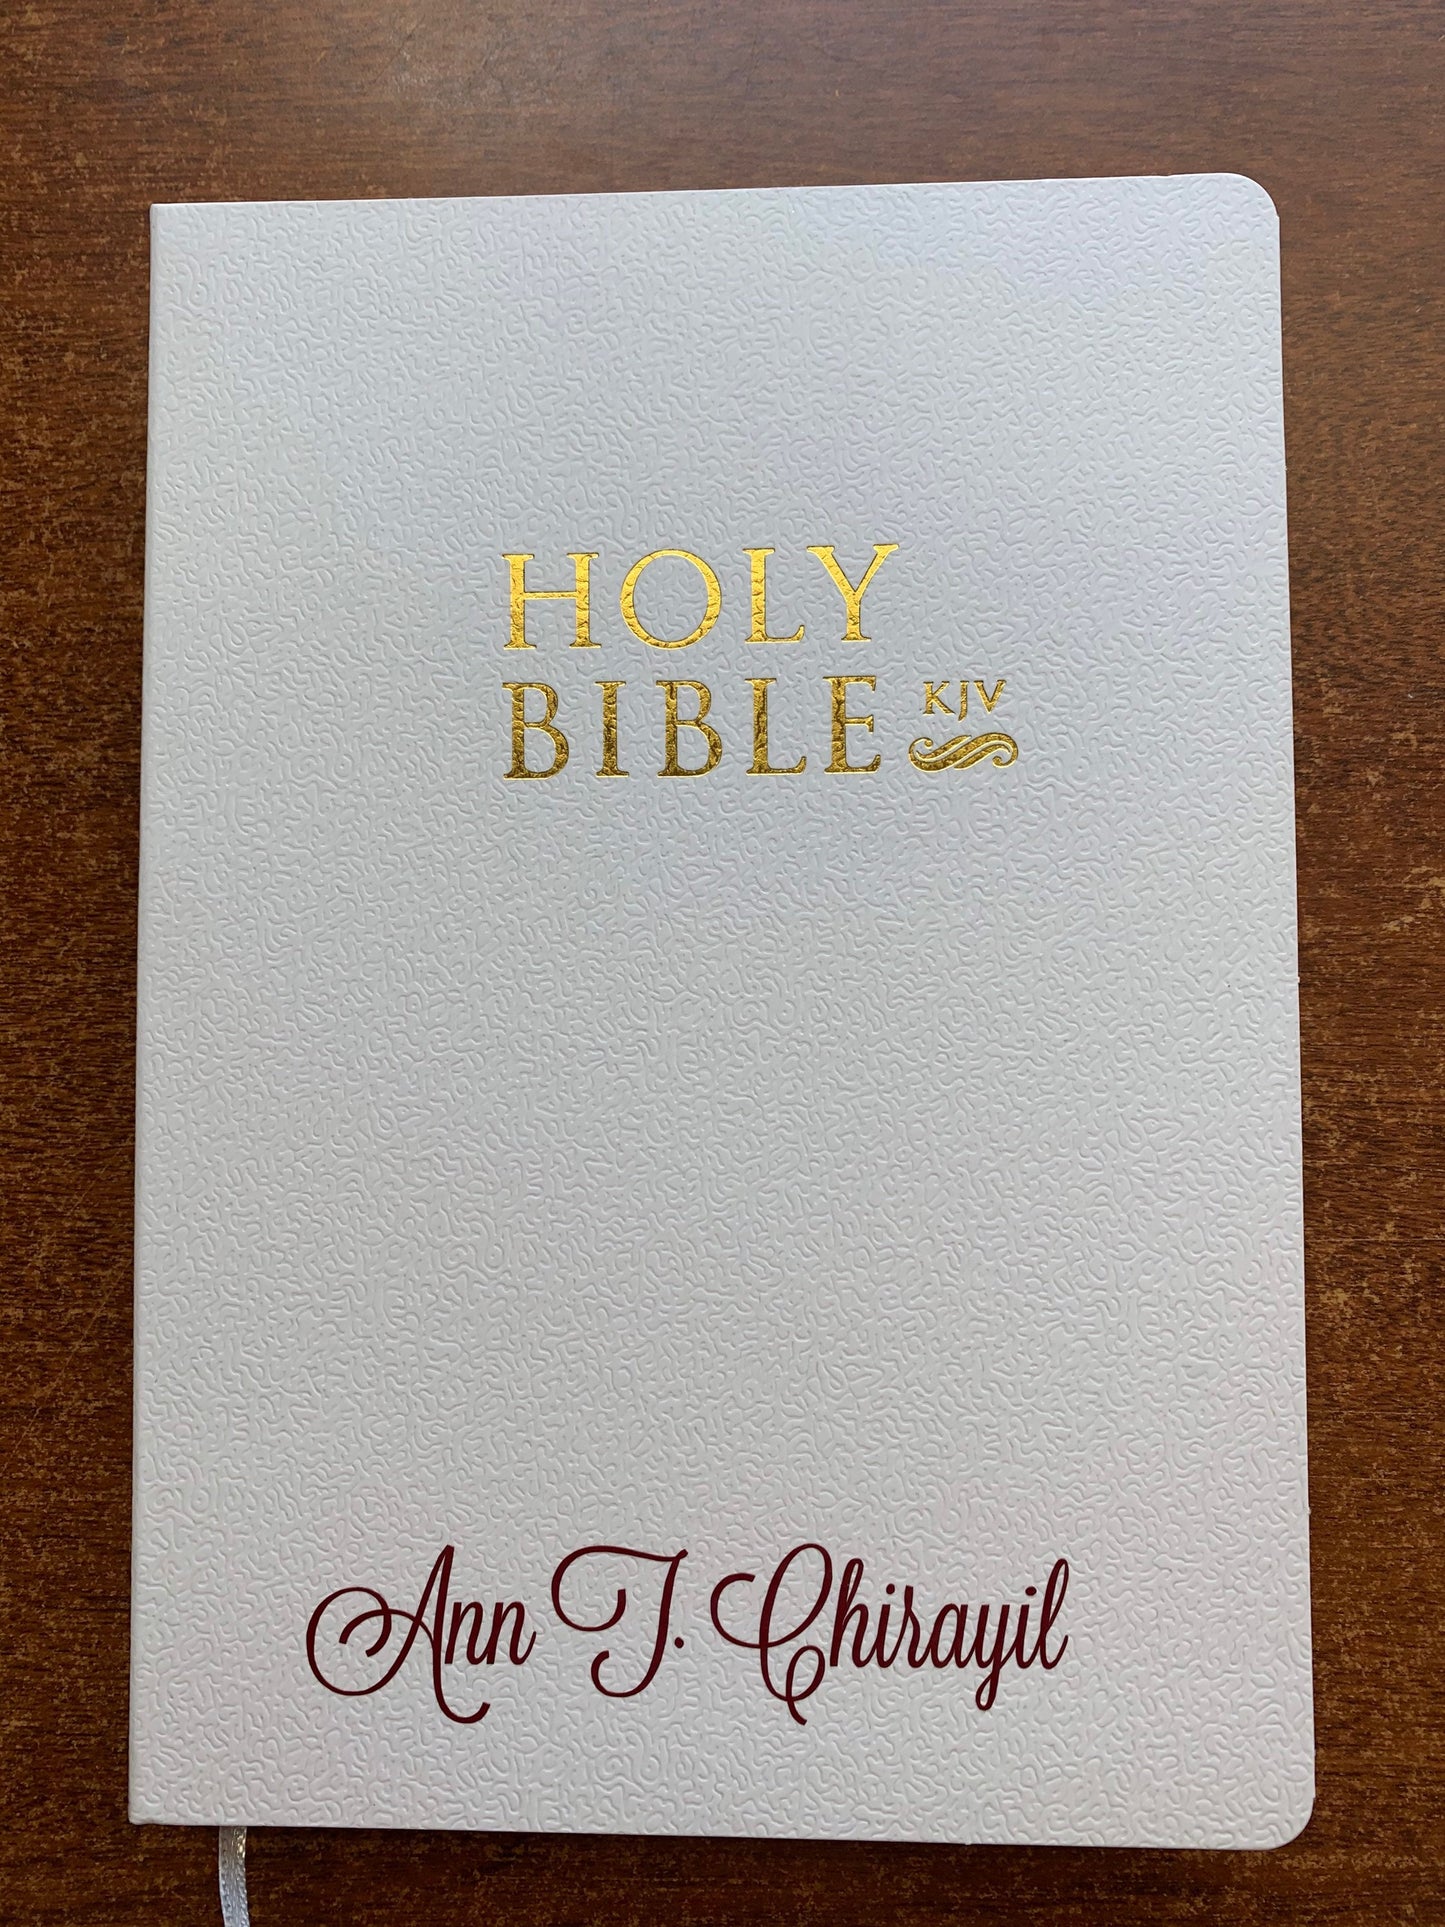 KJV Personalized Bible